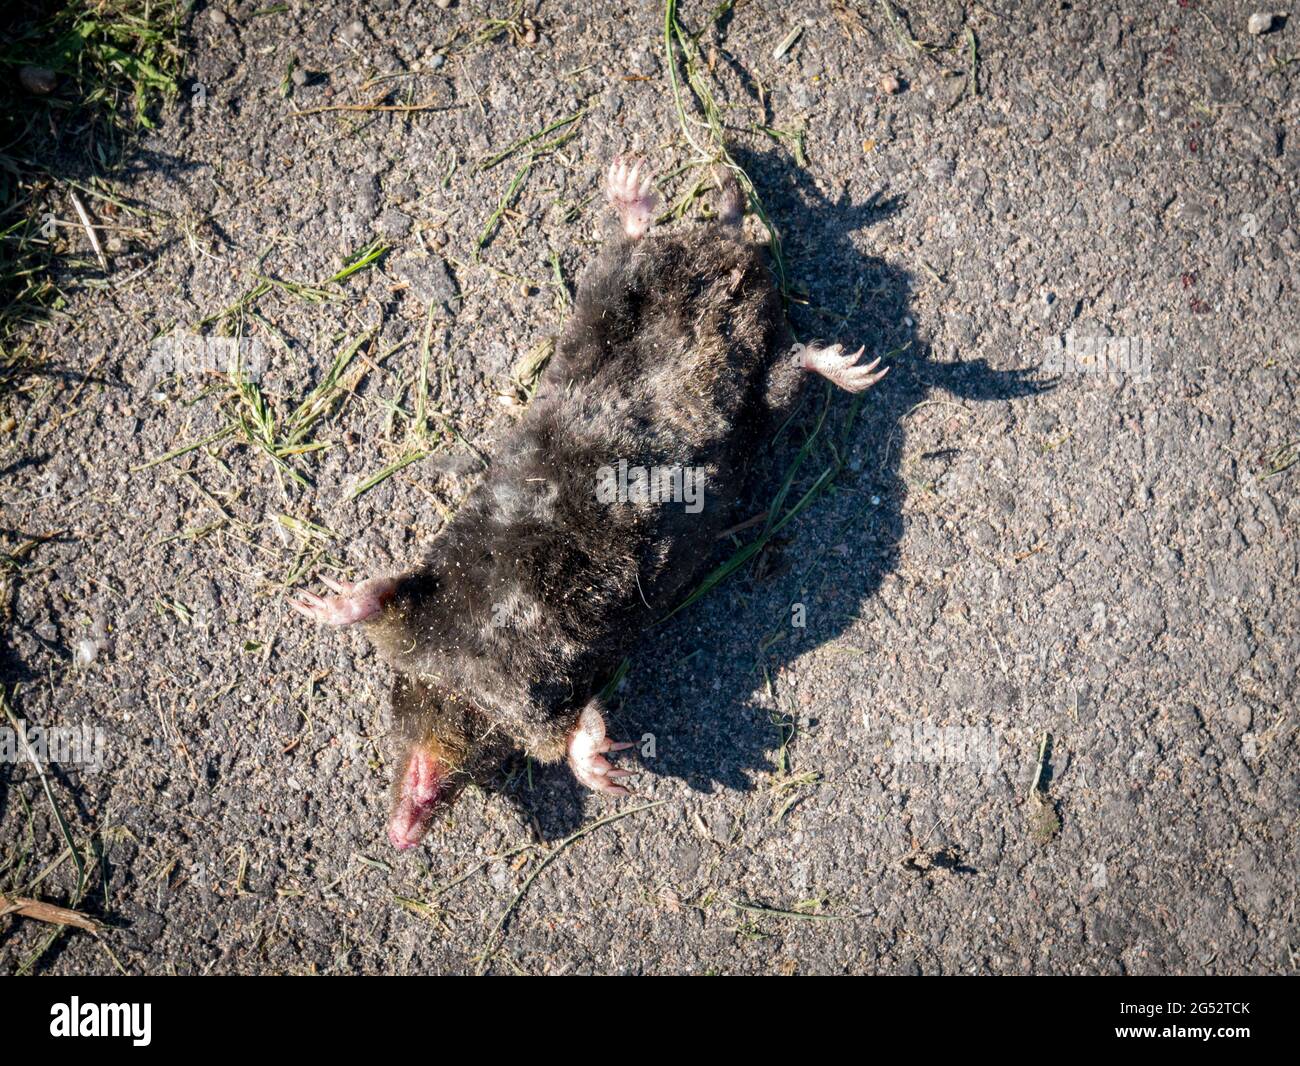 Common mole, Talpa europaea, lying on his back on asphalt, dead, roadkill traffic victim Stock Photo